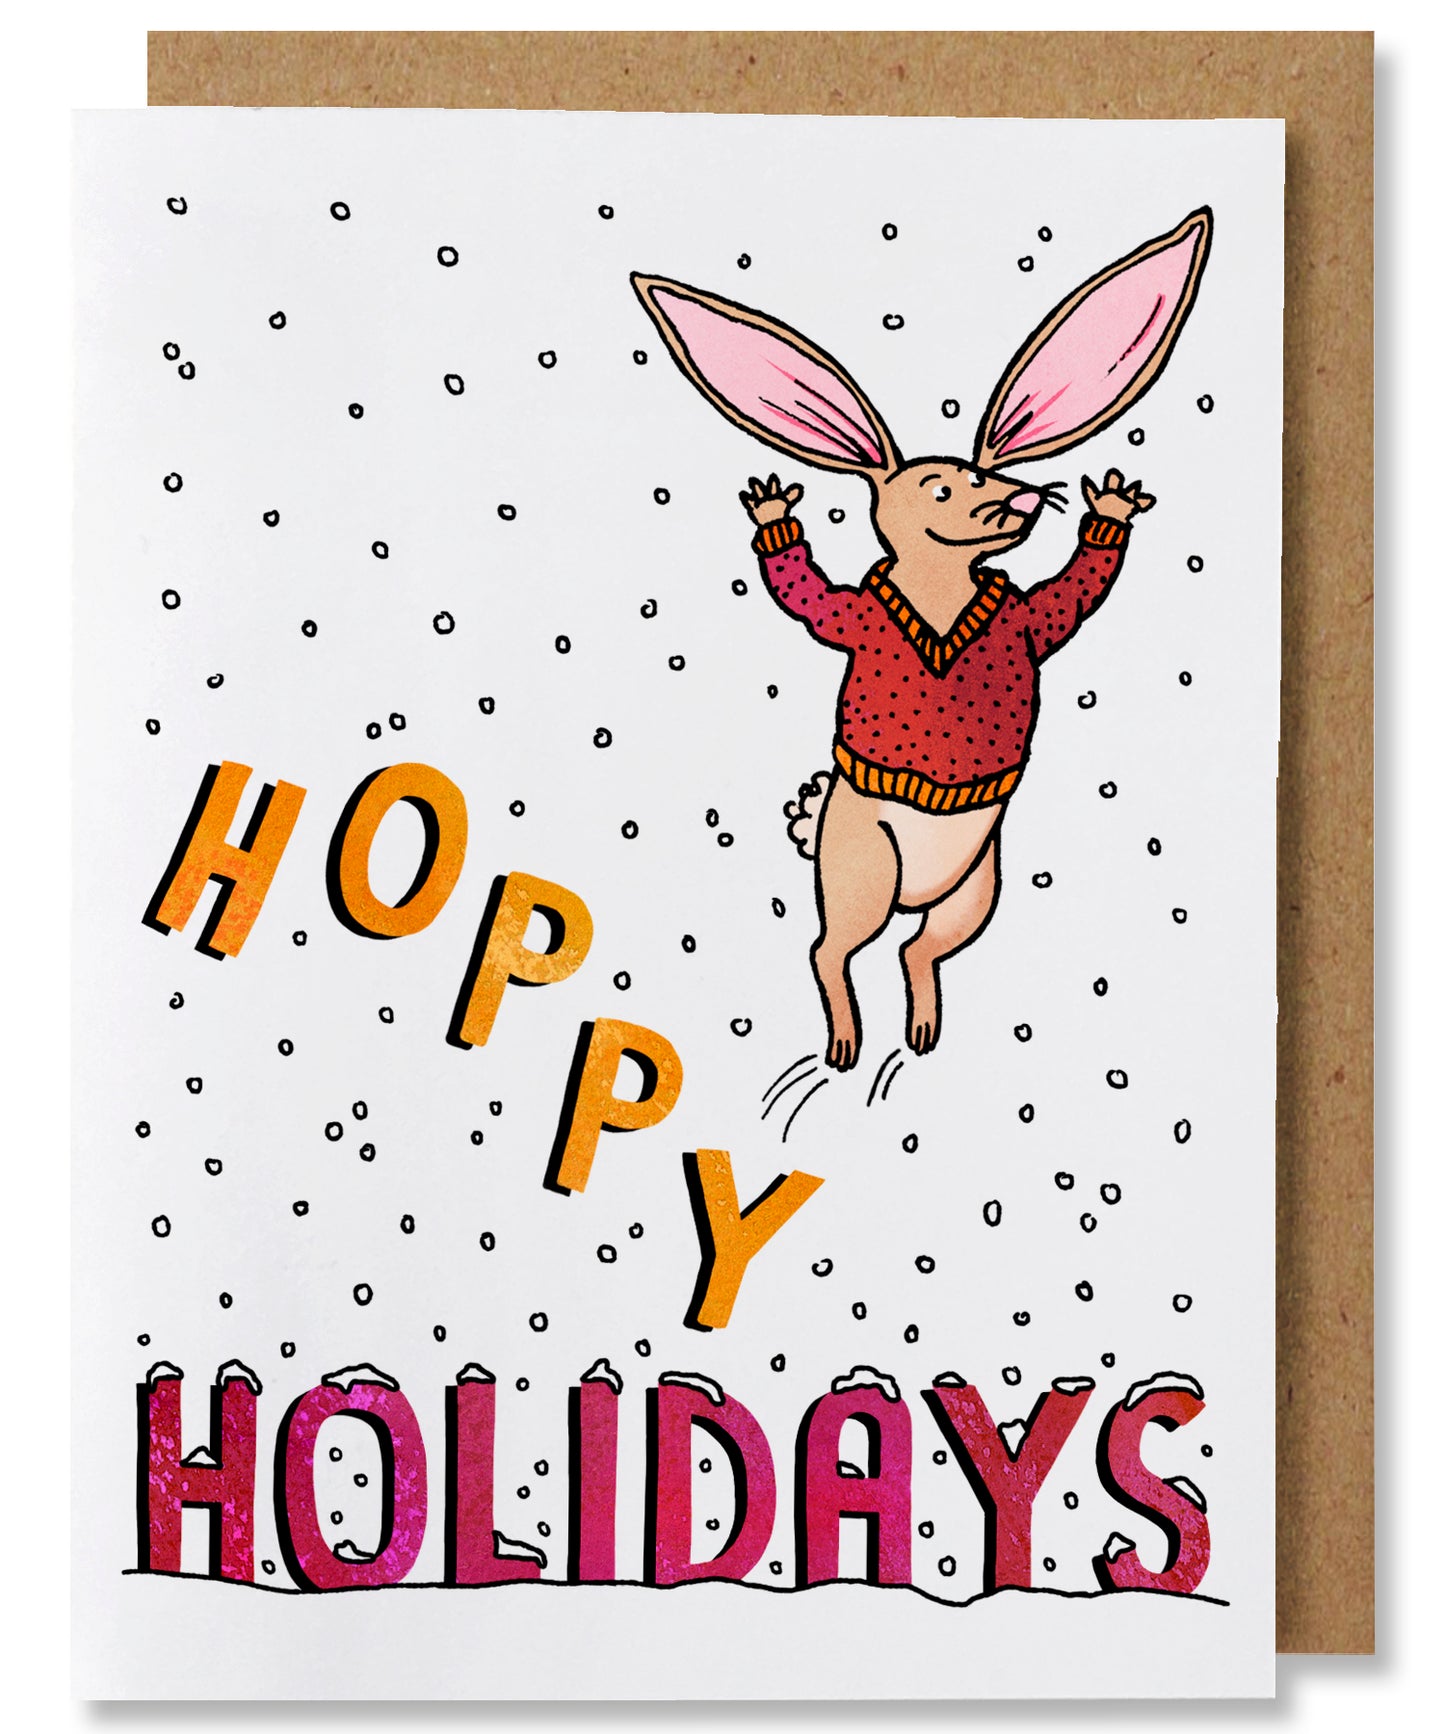 Hoppy Holidays Card - Illustrated Rabbit Pun Christmas Card